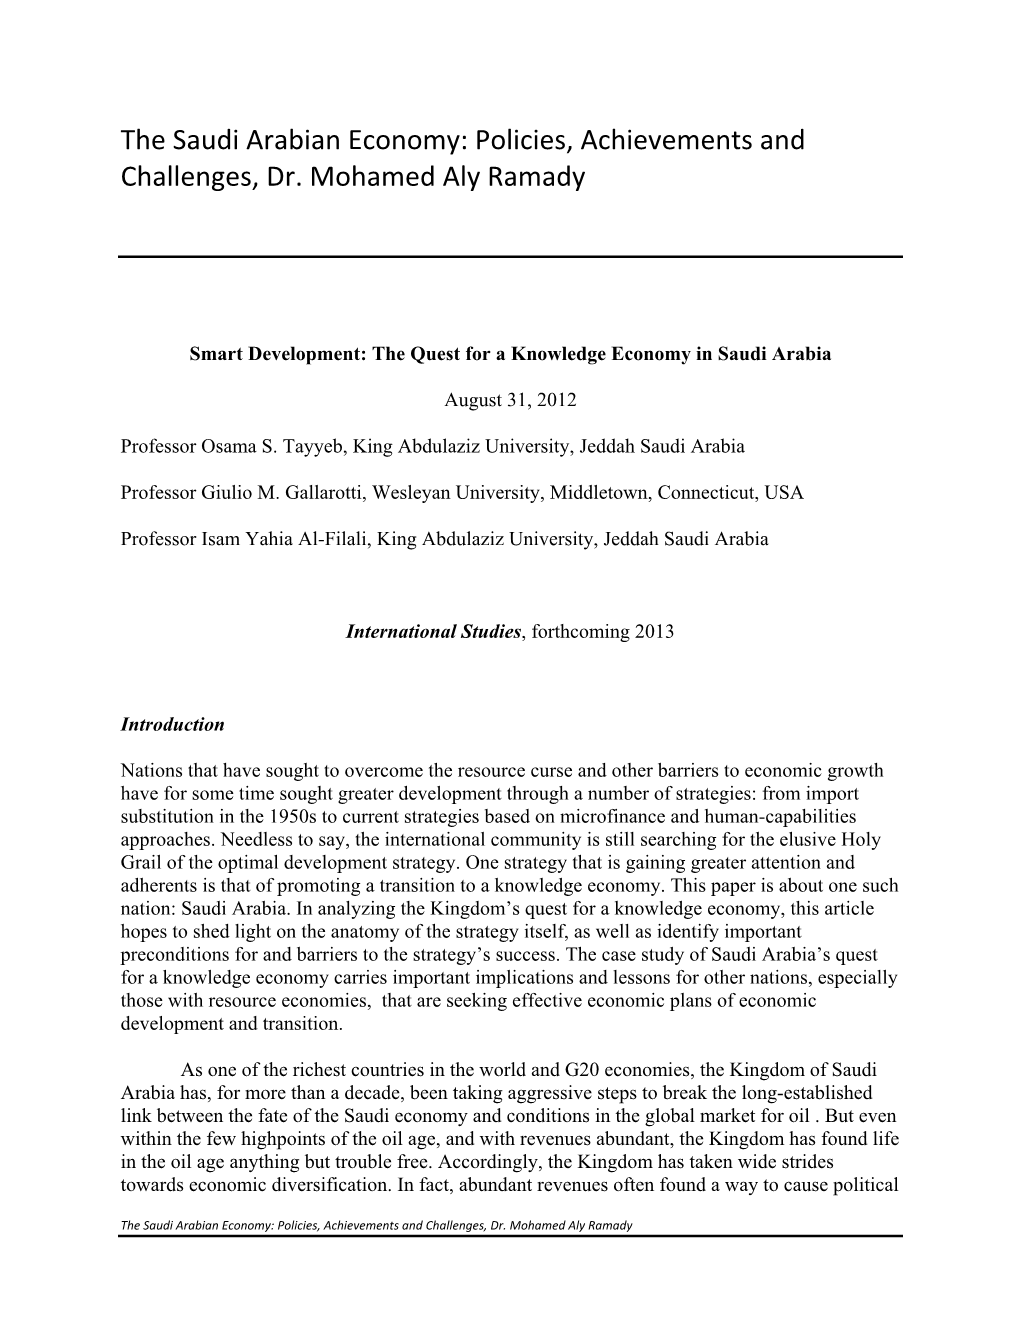 Saudi Arabian Economy: Policies, Achievements and Challenges, Dr